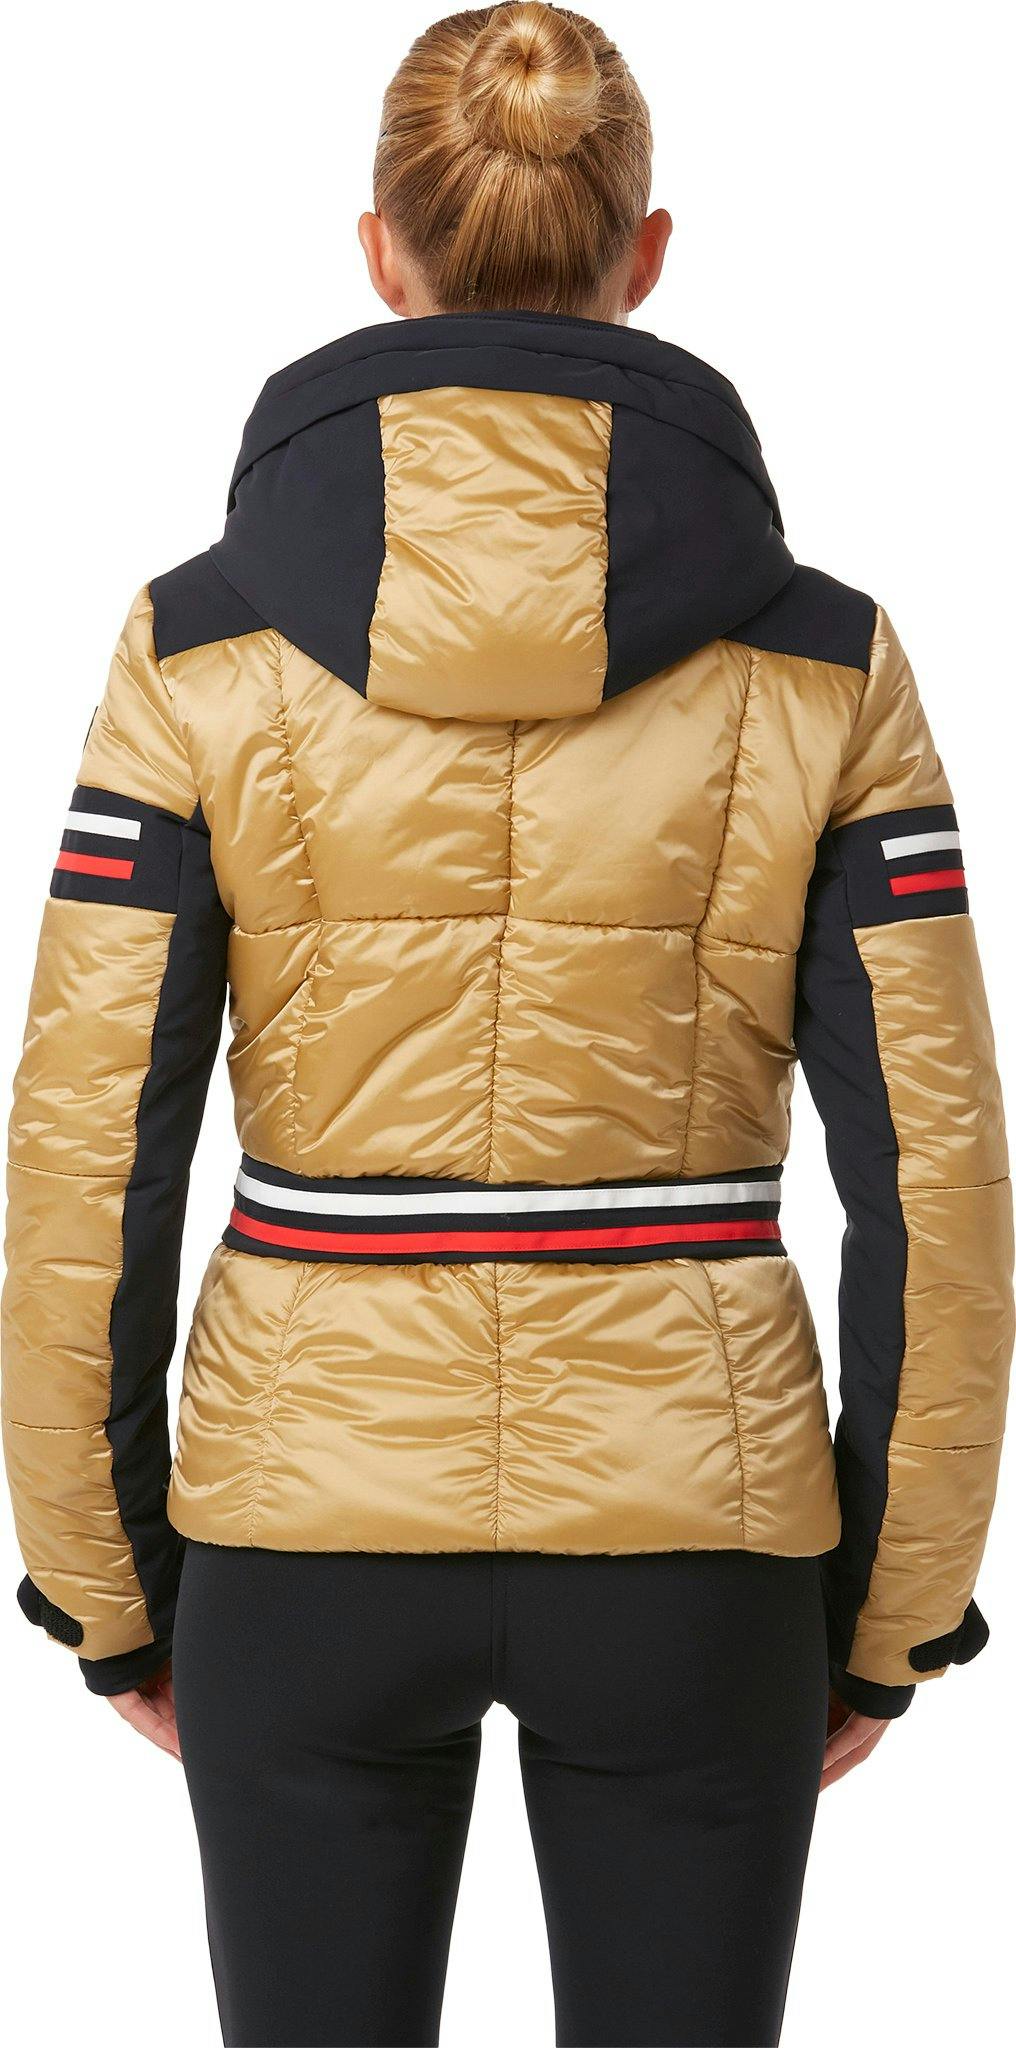 Product gallery image number 4 for product Nana Splendid Ski Jacket - Women's